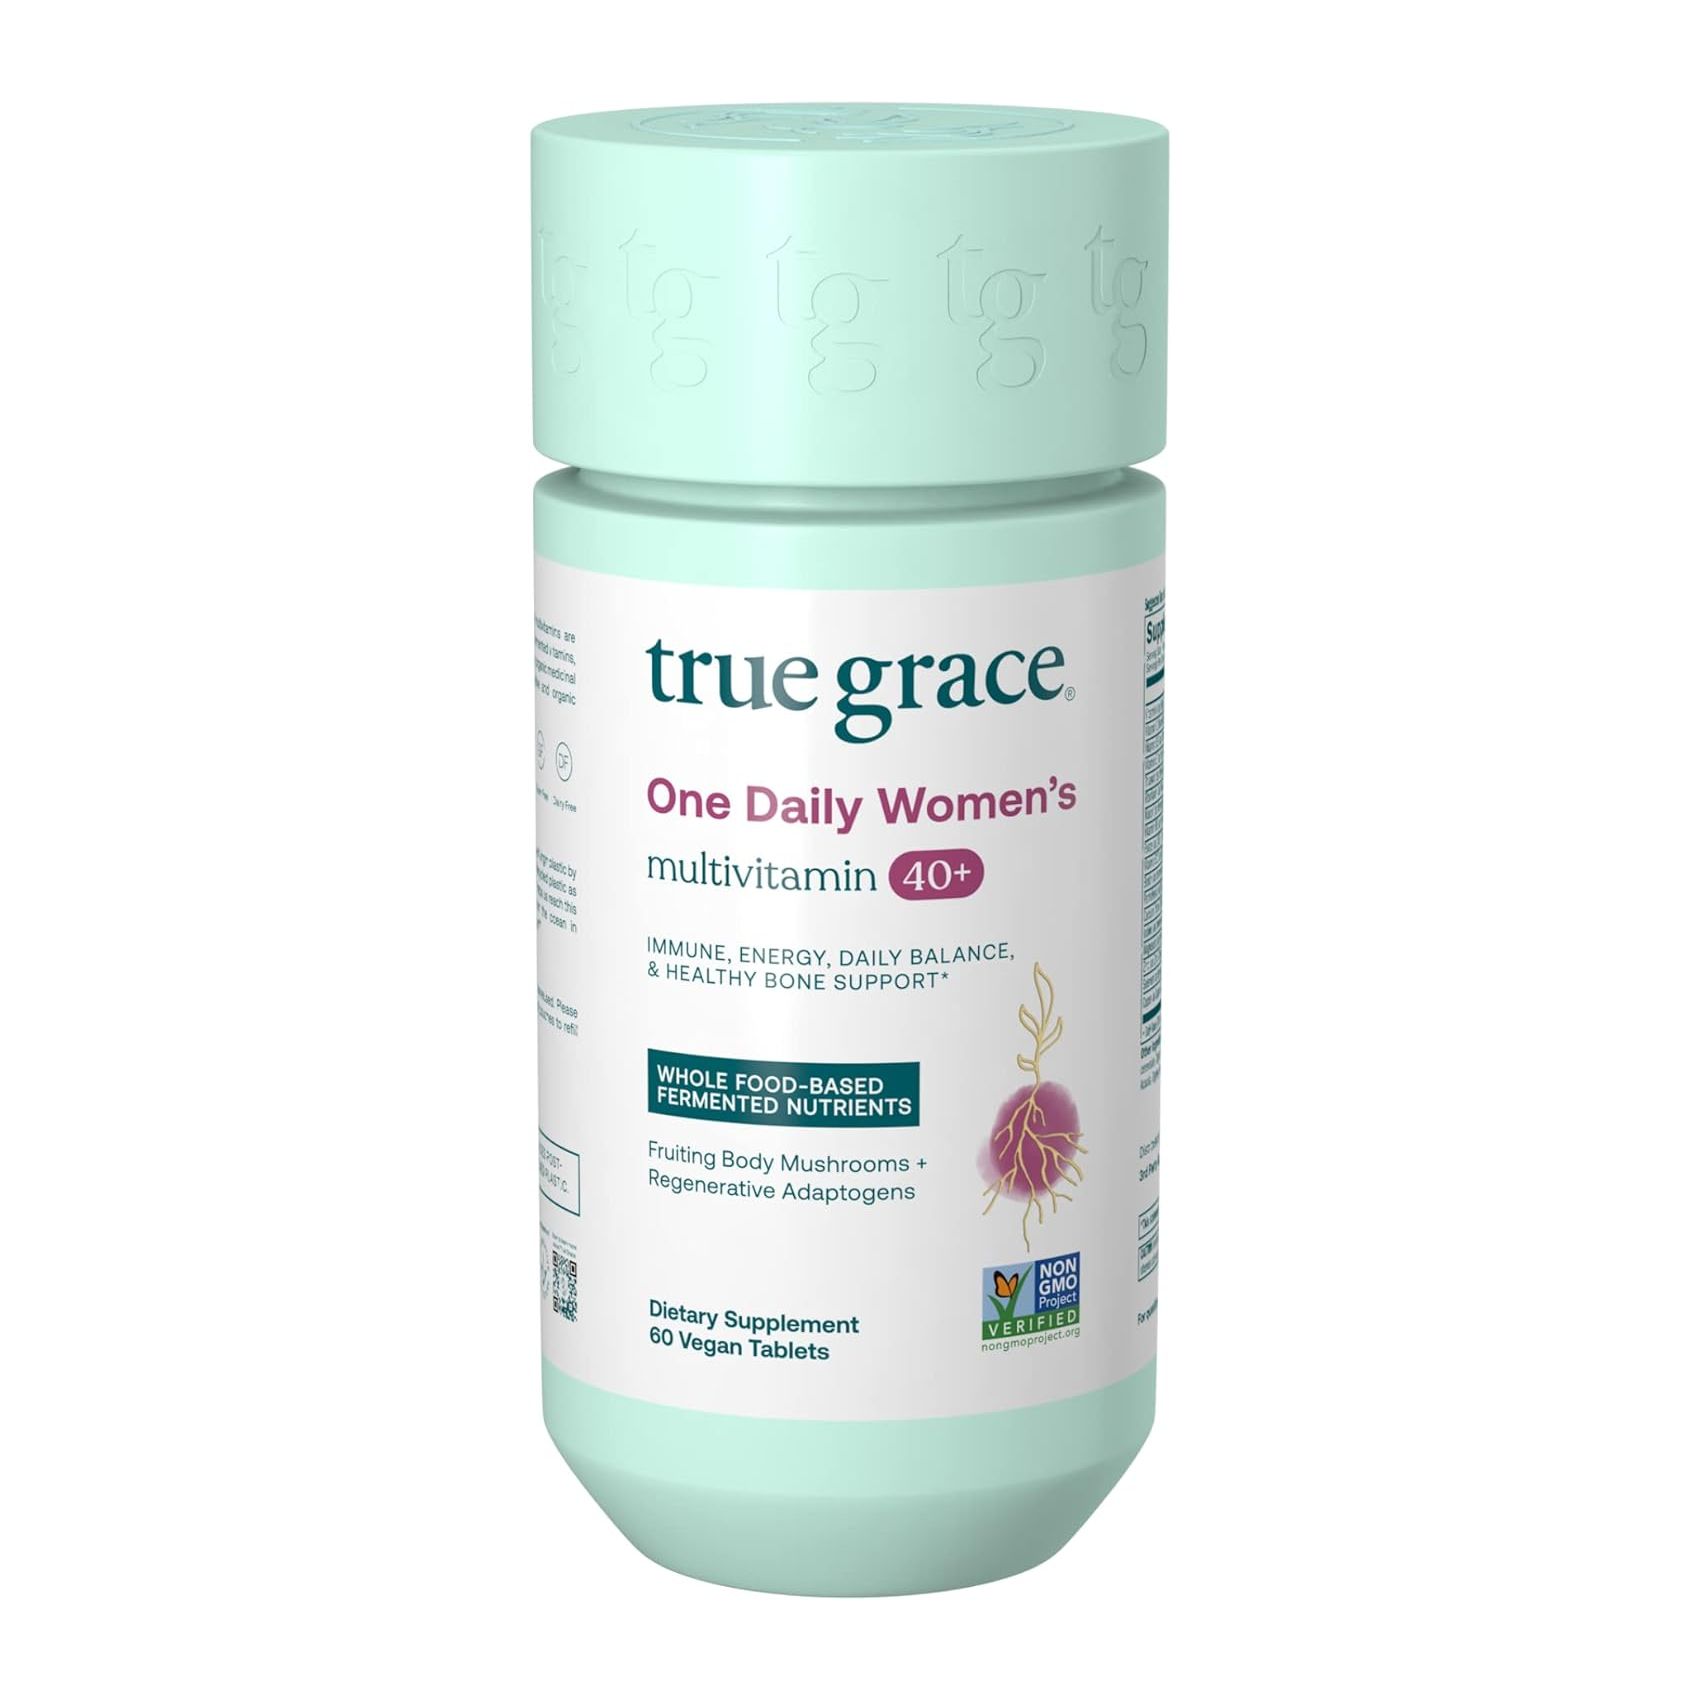 Мультивитамины True Grace One Daily Women’s 40+, 60 таблеток цена и фото